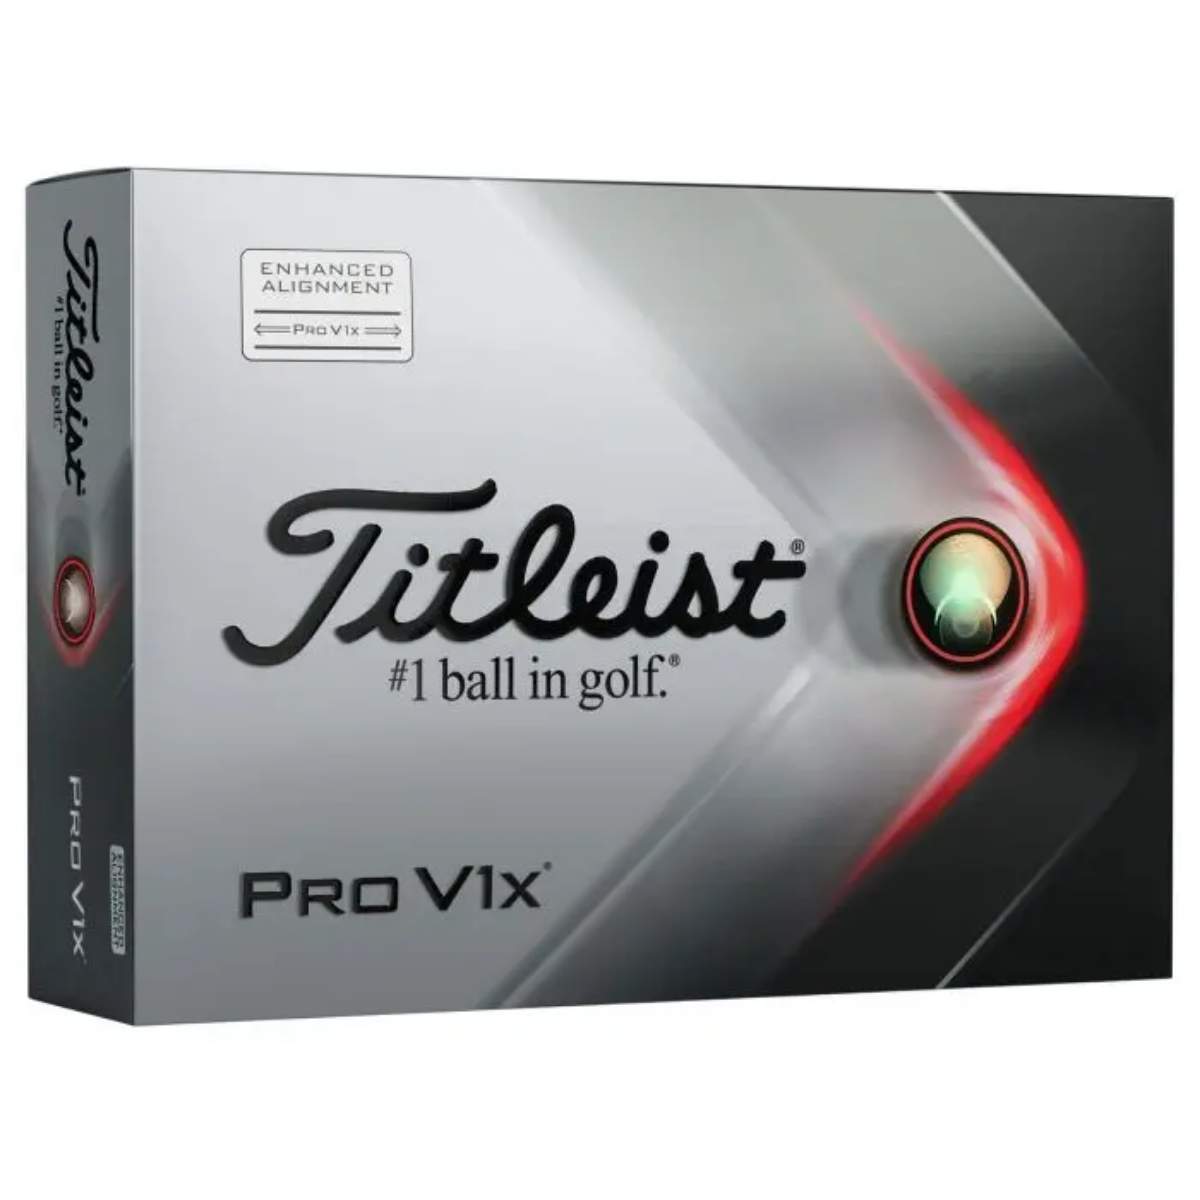 Titleist 2021 Pro V1x Golf Ball - Enhanced Alignment